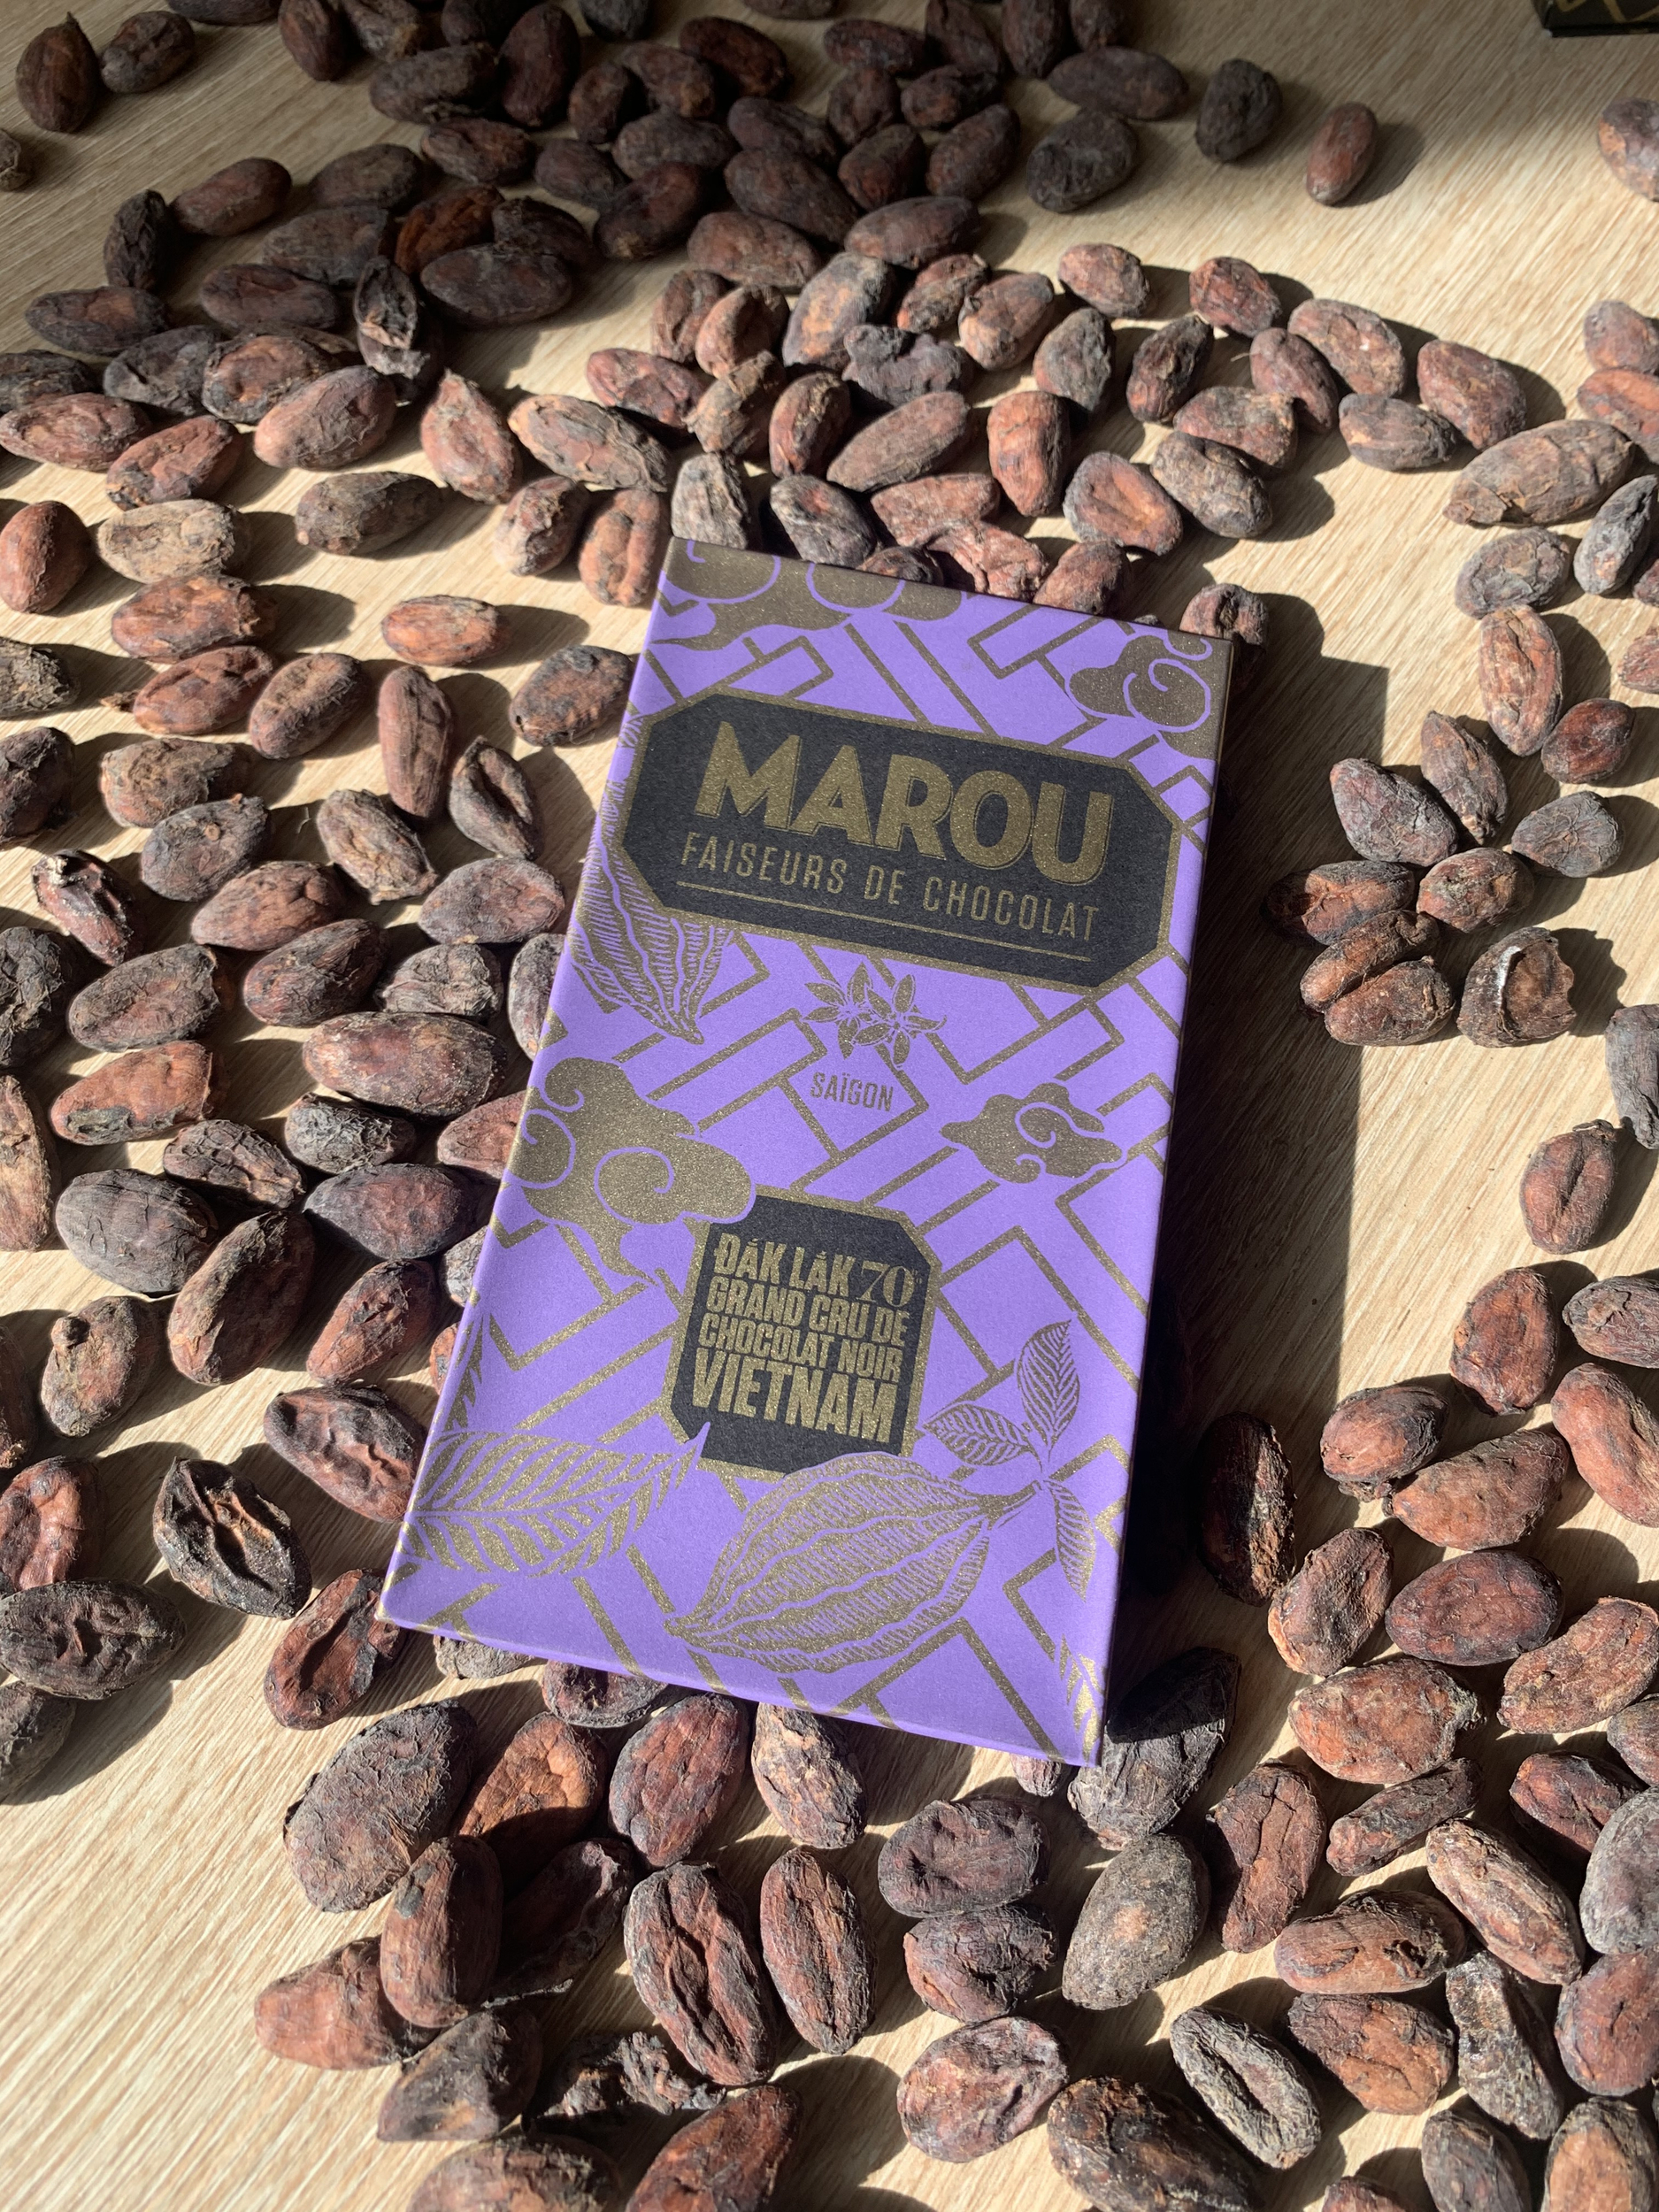 Tablette Chocolat MAROU - DAK LAK 70%